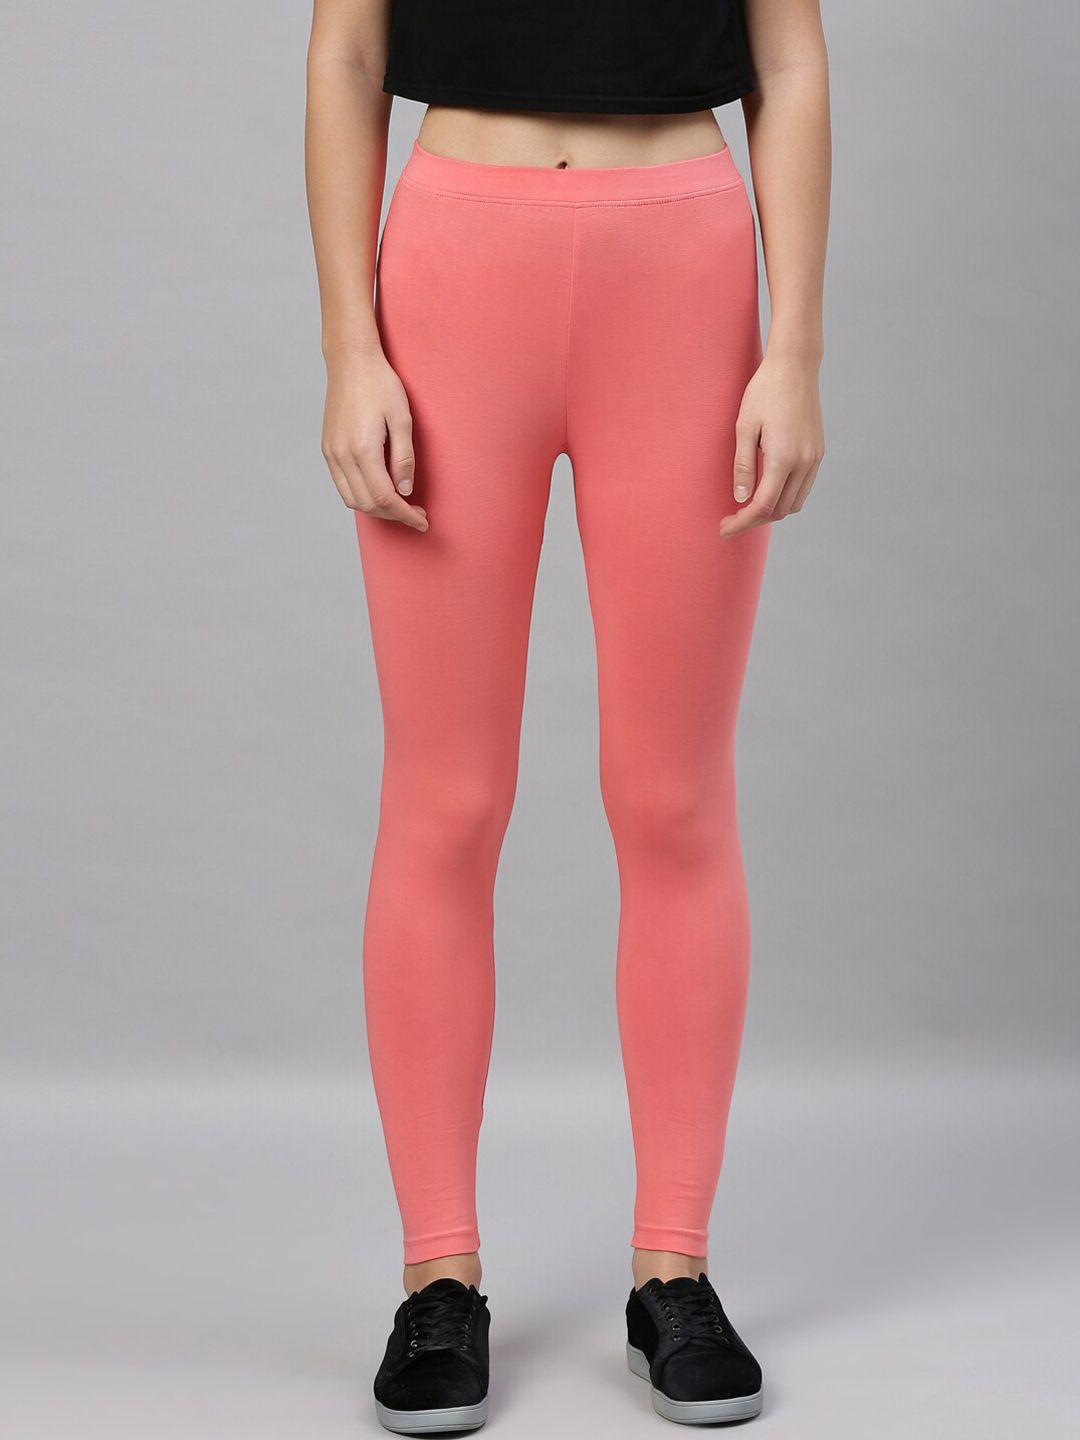 kryptic-women-pink-solid-ankle-length-leggings